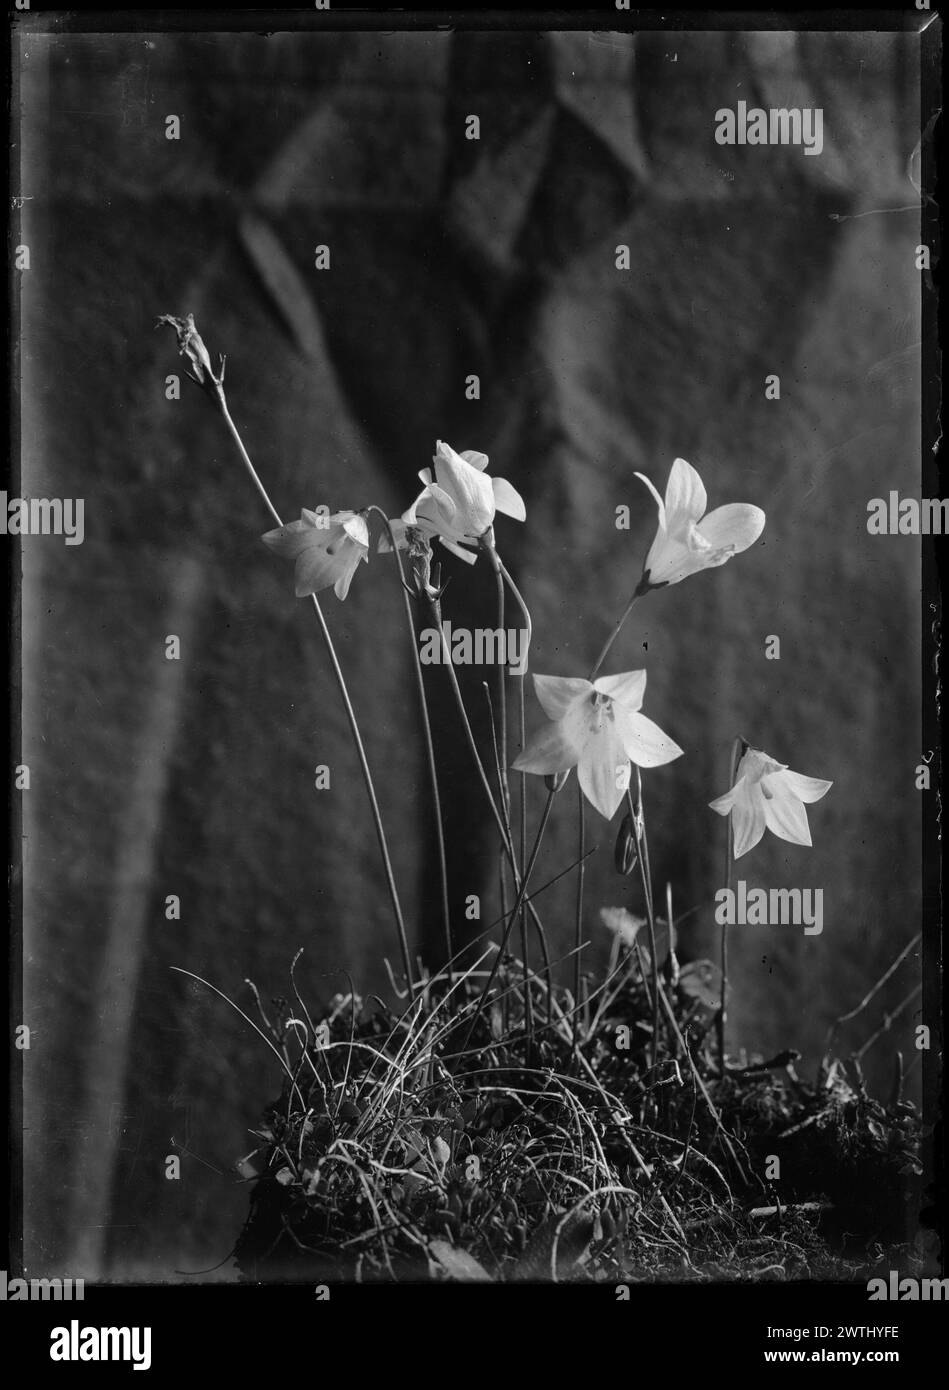 Wahlenbergia black-and-white negatives Stock Photo